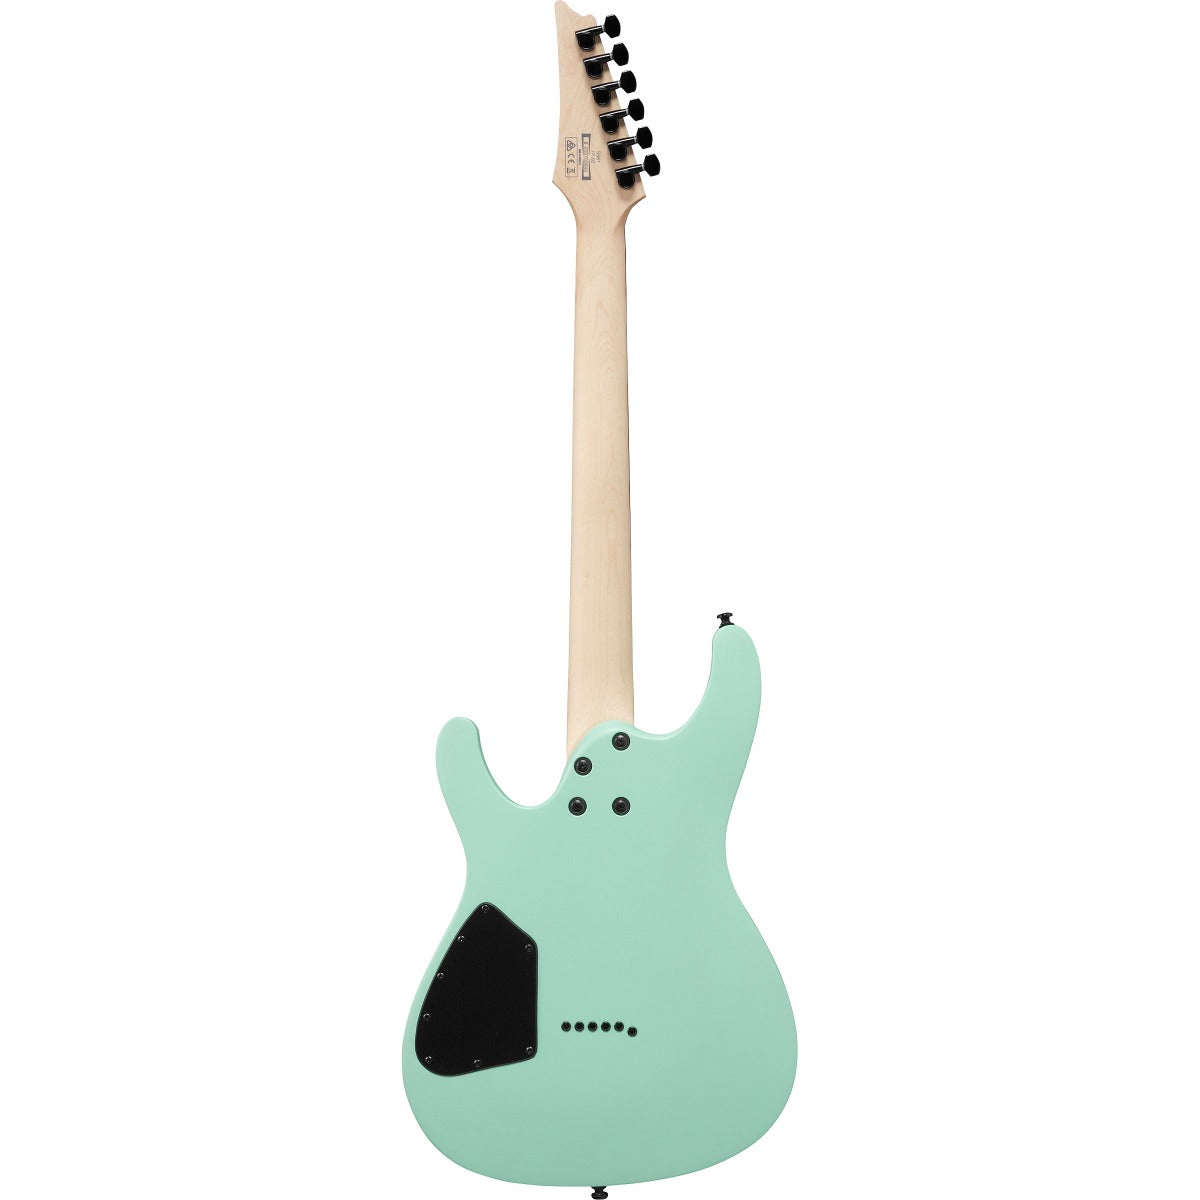 Back view of Ibanez S561 S Standard Electric Guitar - Sea Foam Green